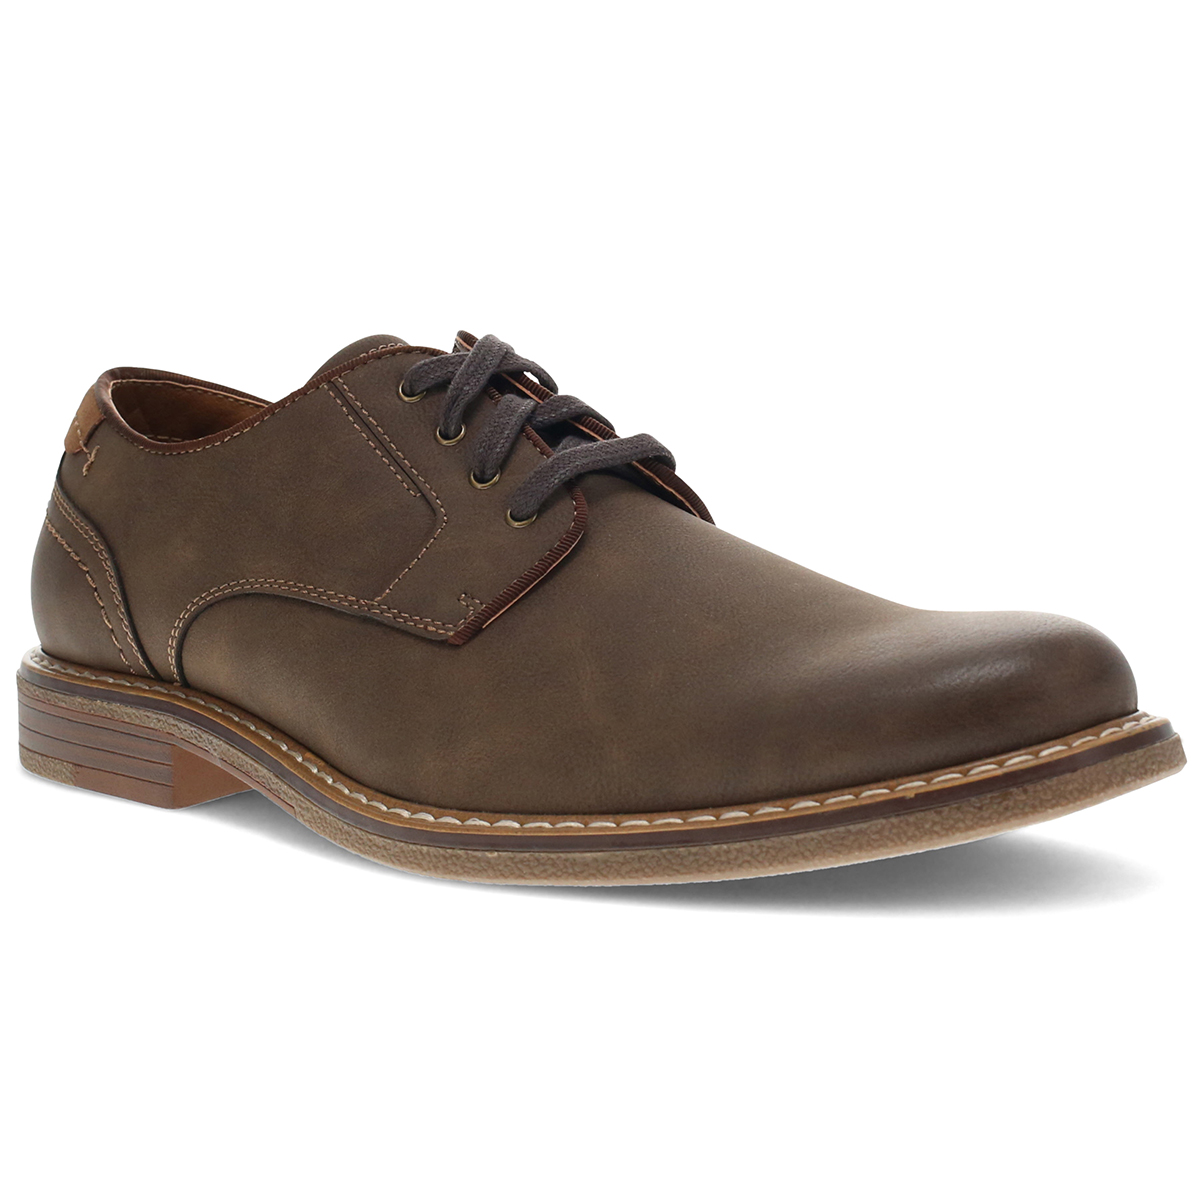 Dockers Men's Bronson Oxford Shoes - Size 13